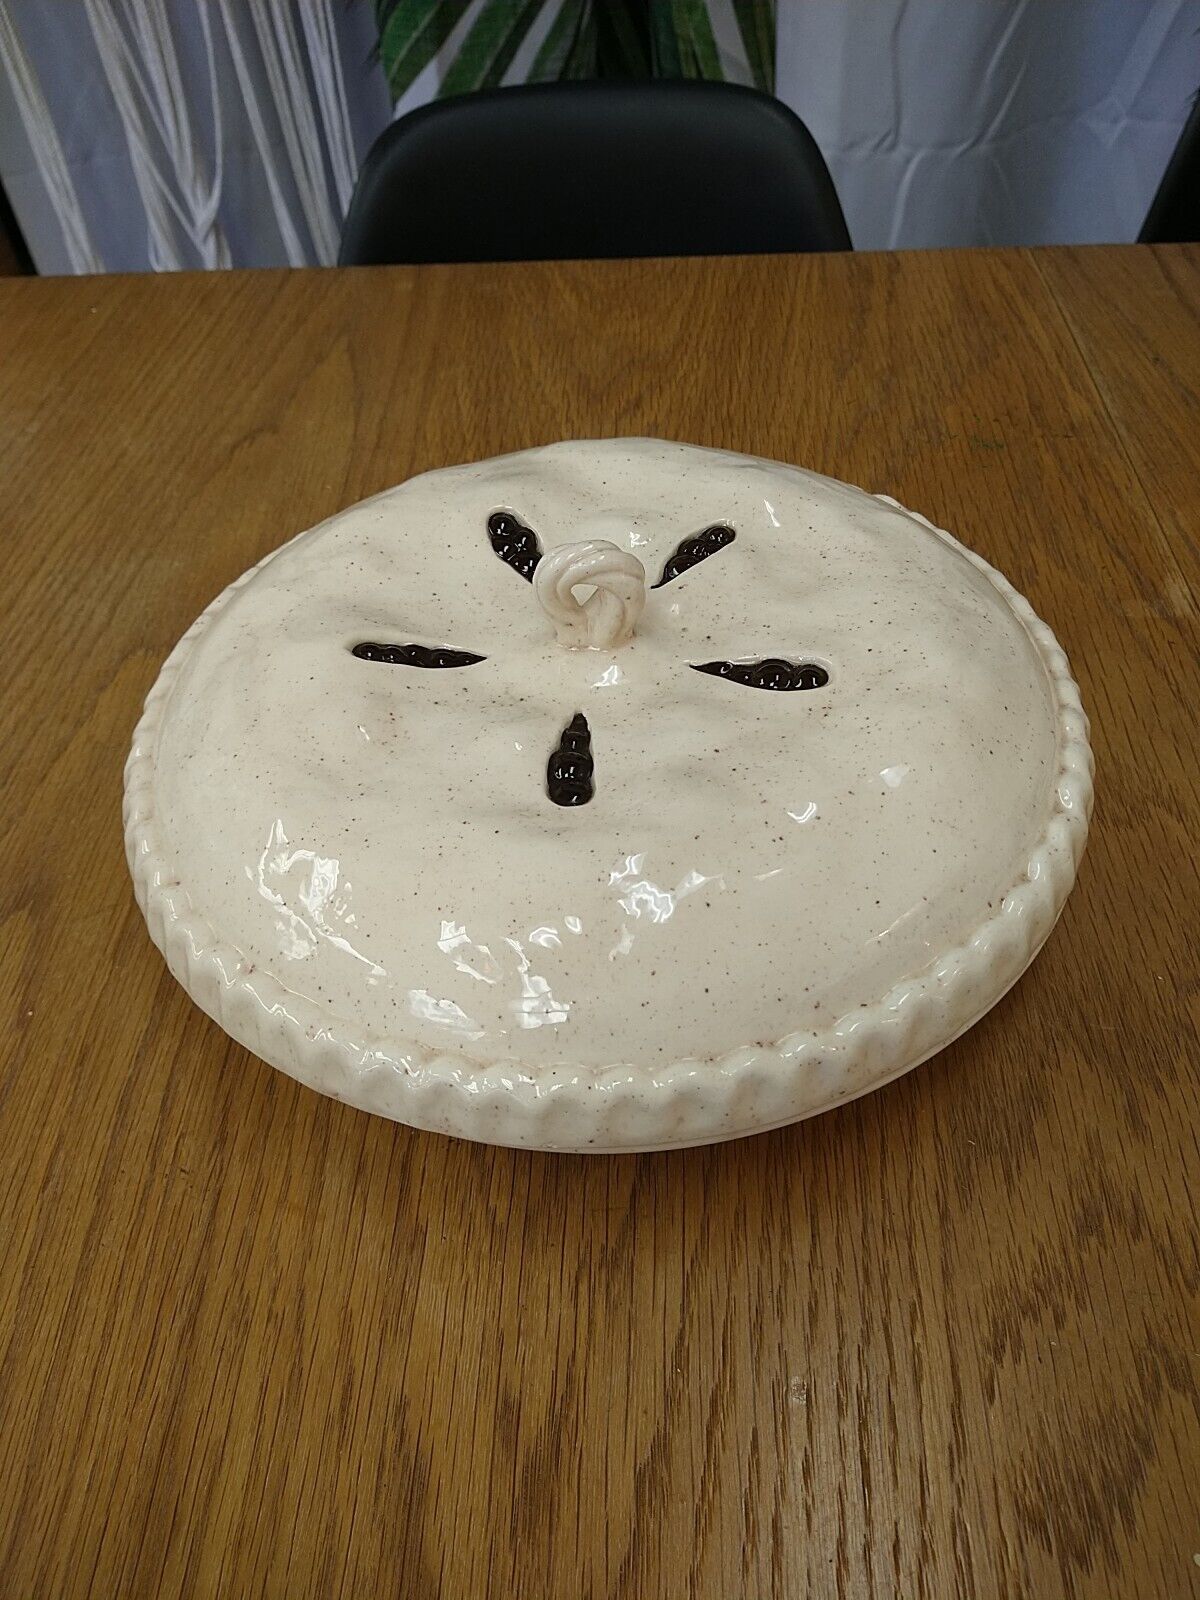 Rare Vintage Ceramic Covered Round Pie Plate Baking Dish Handmade Signed 1978